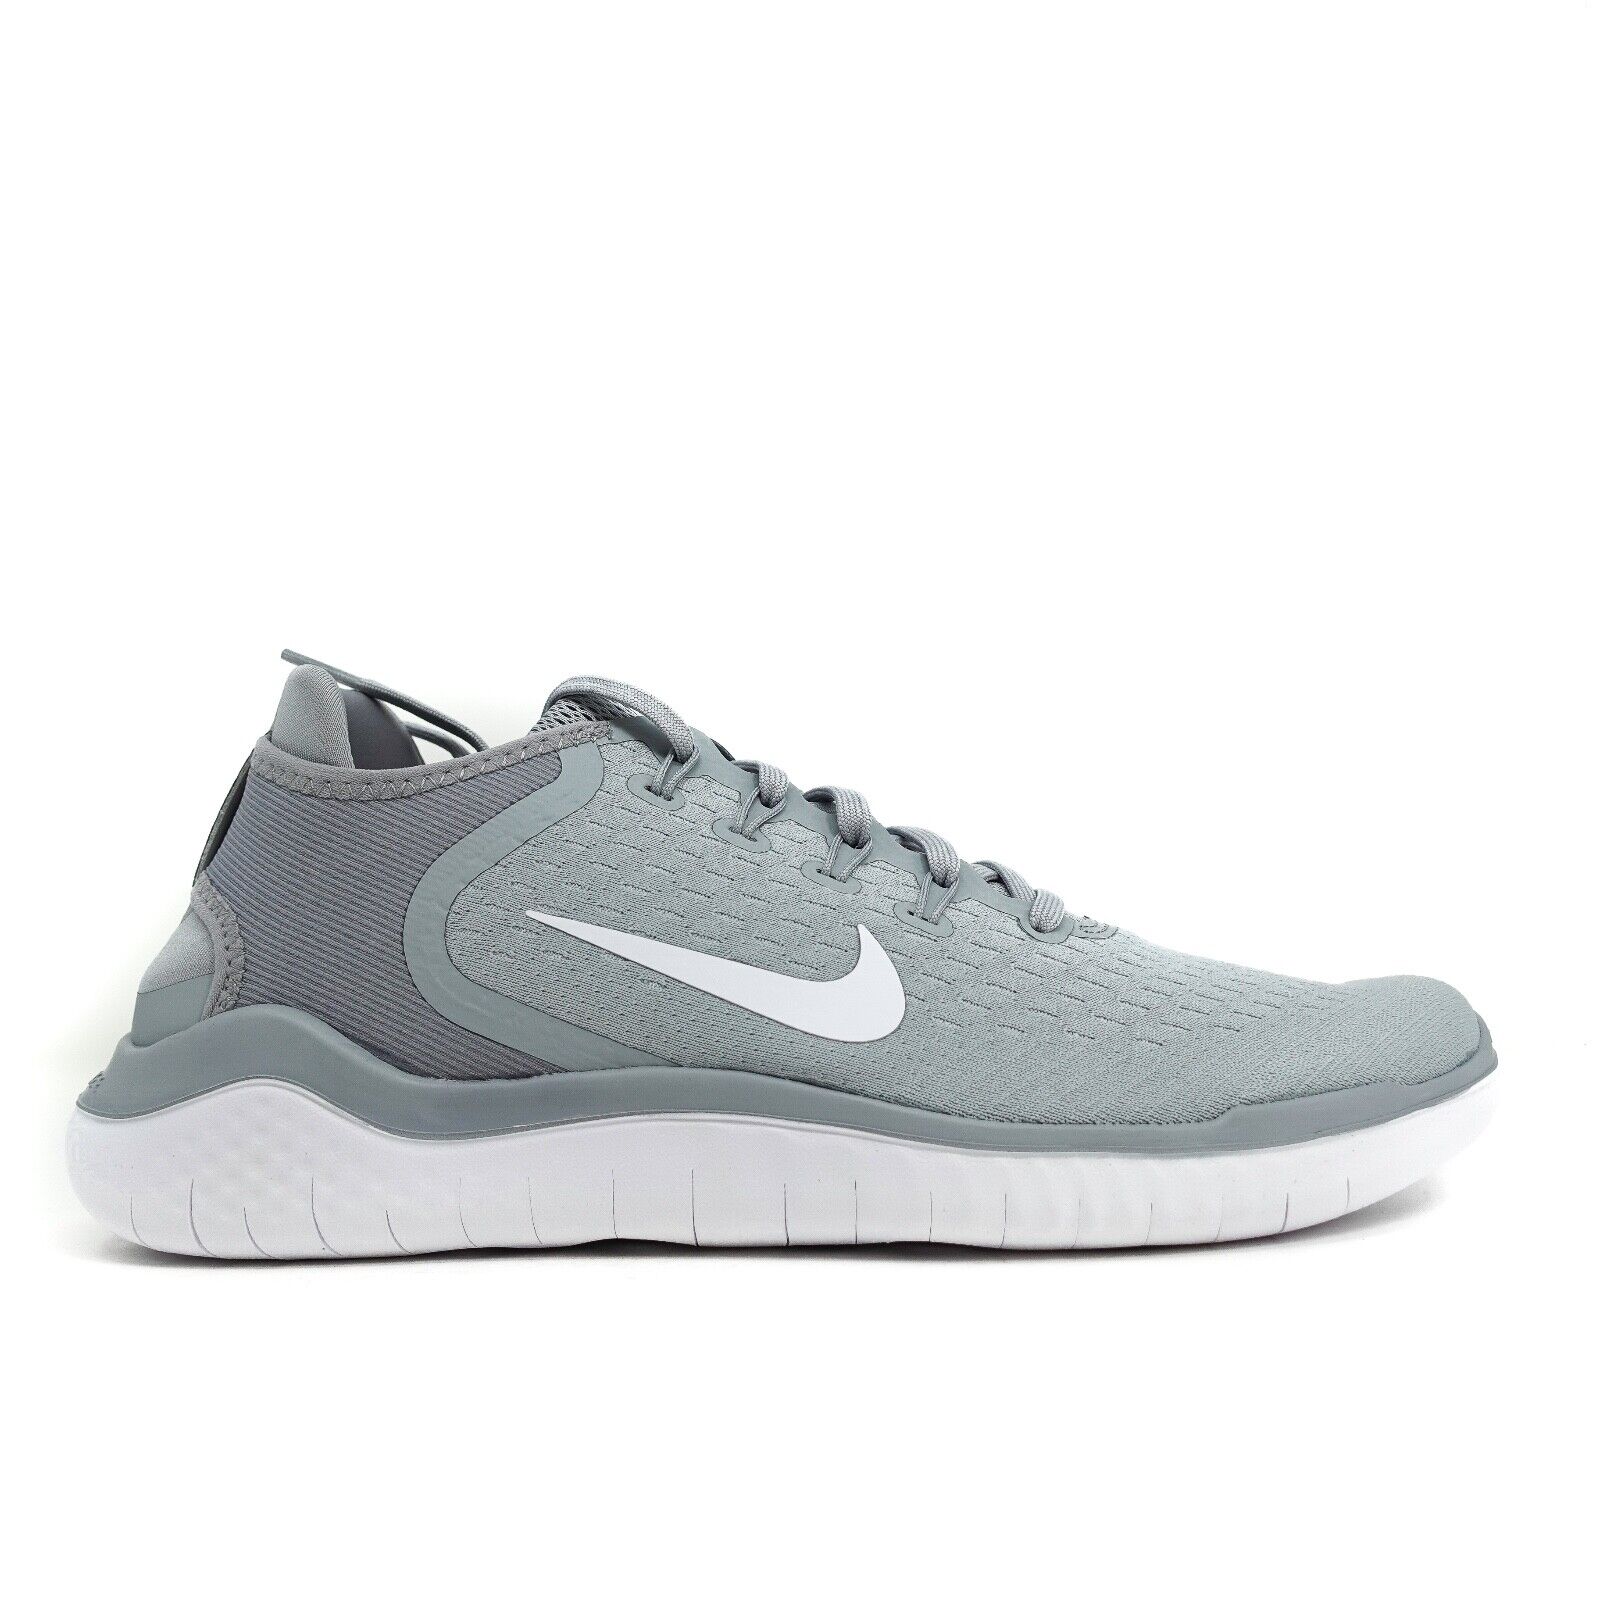 Nike Free RN Mens Size Running Shoes Grey White 942836 003 | eBay